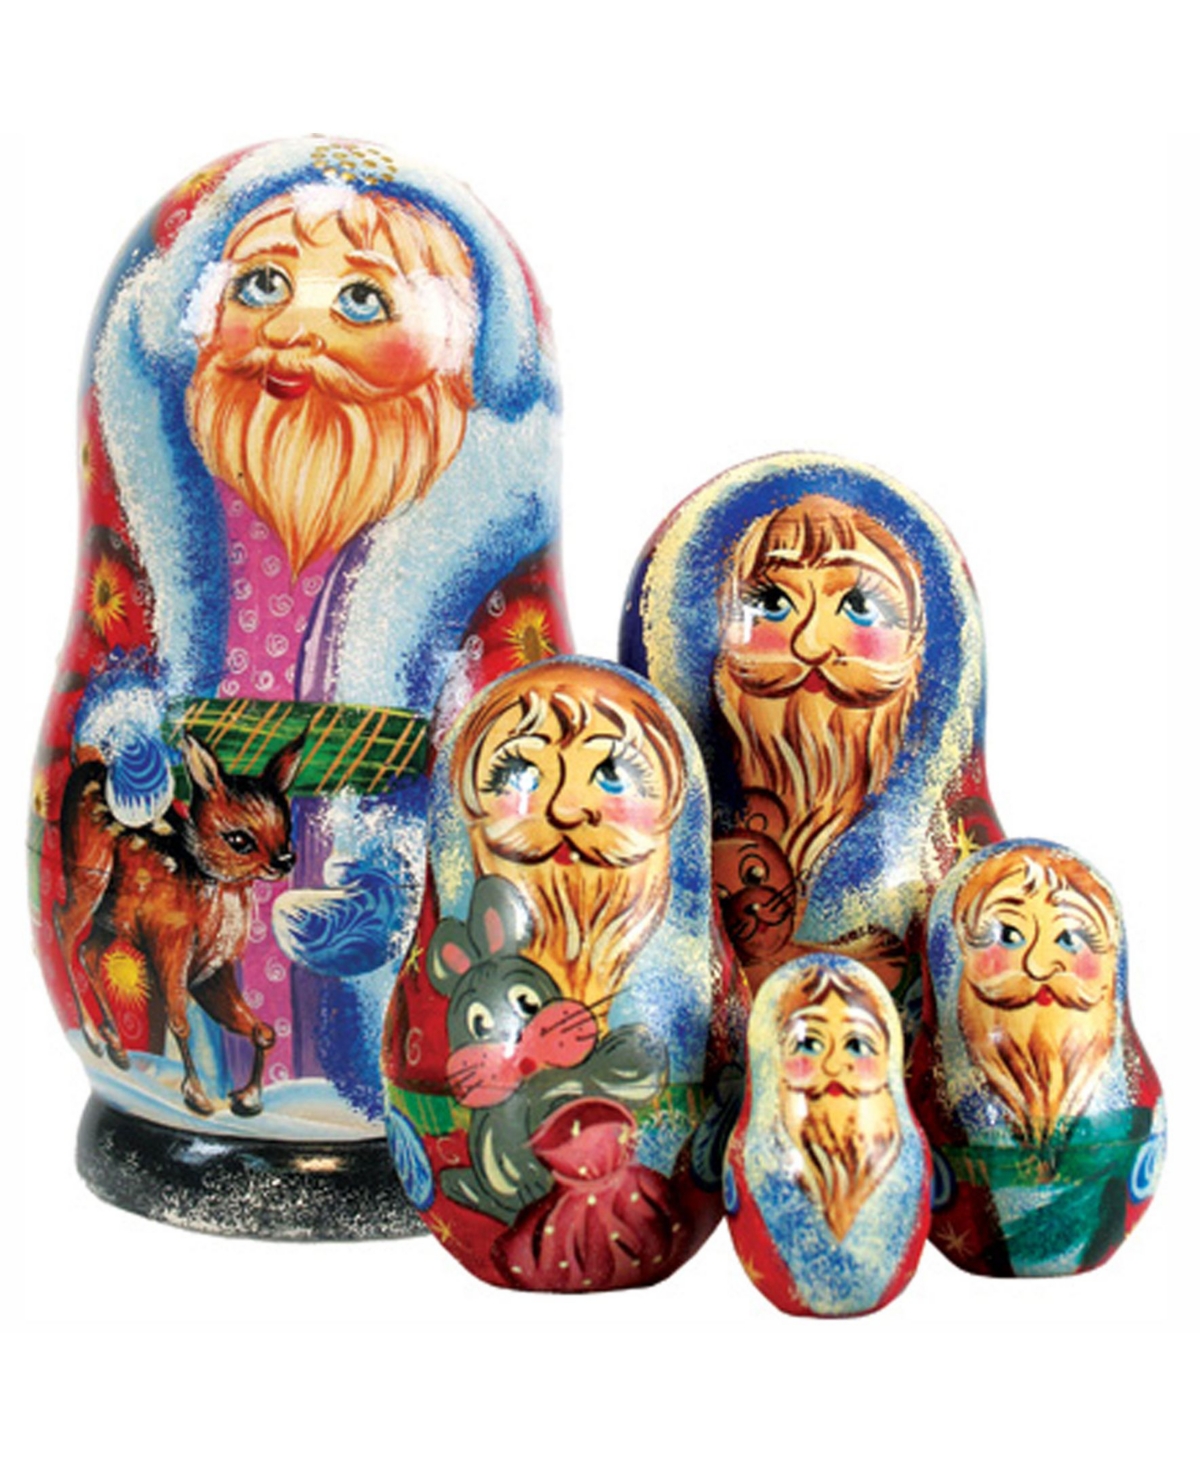 5-Piece Santa Reendear Friend Russian Matryoshka Nested Doll Set - Multi